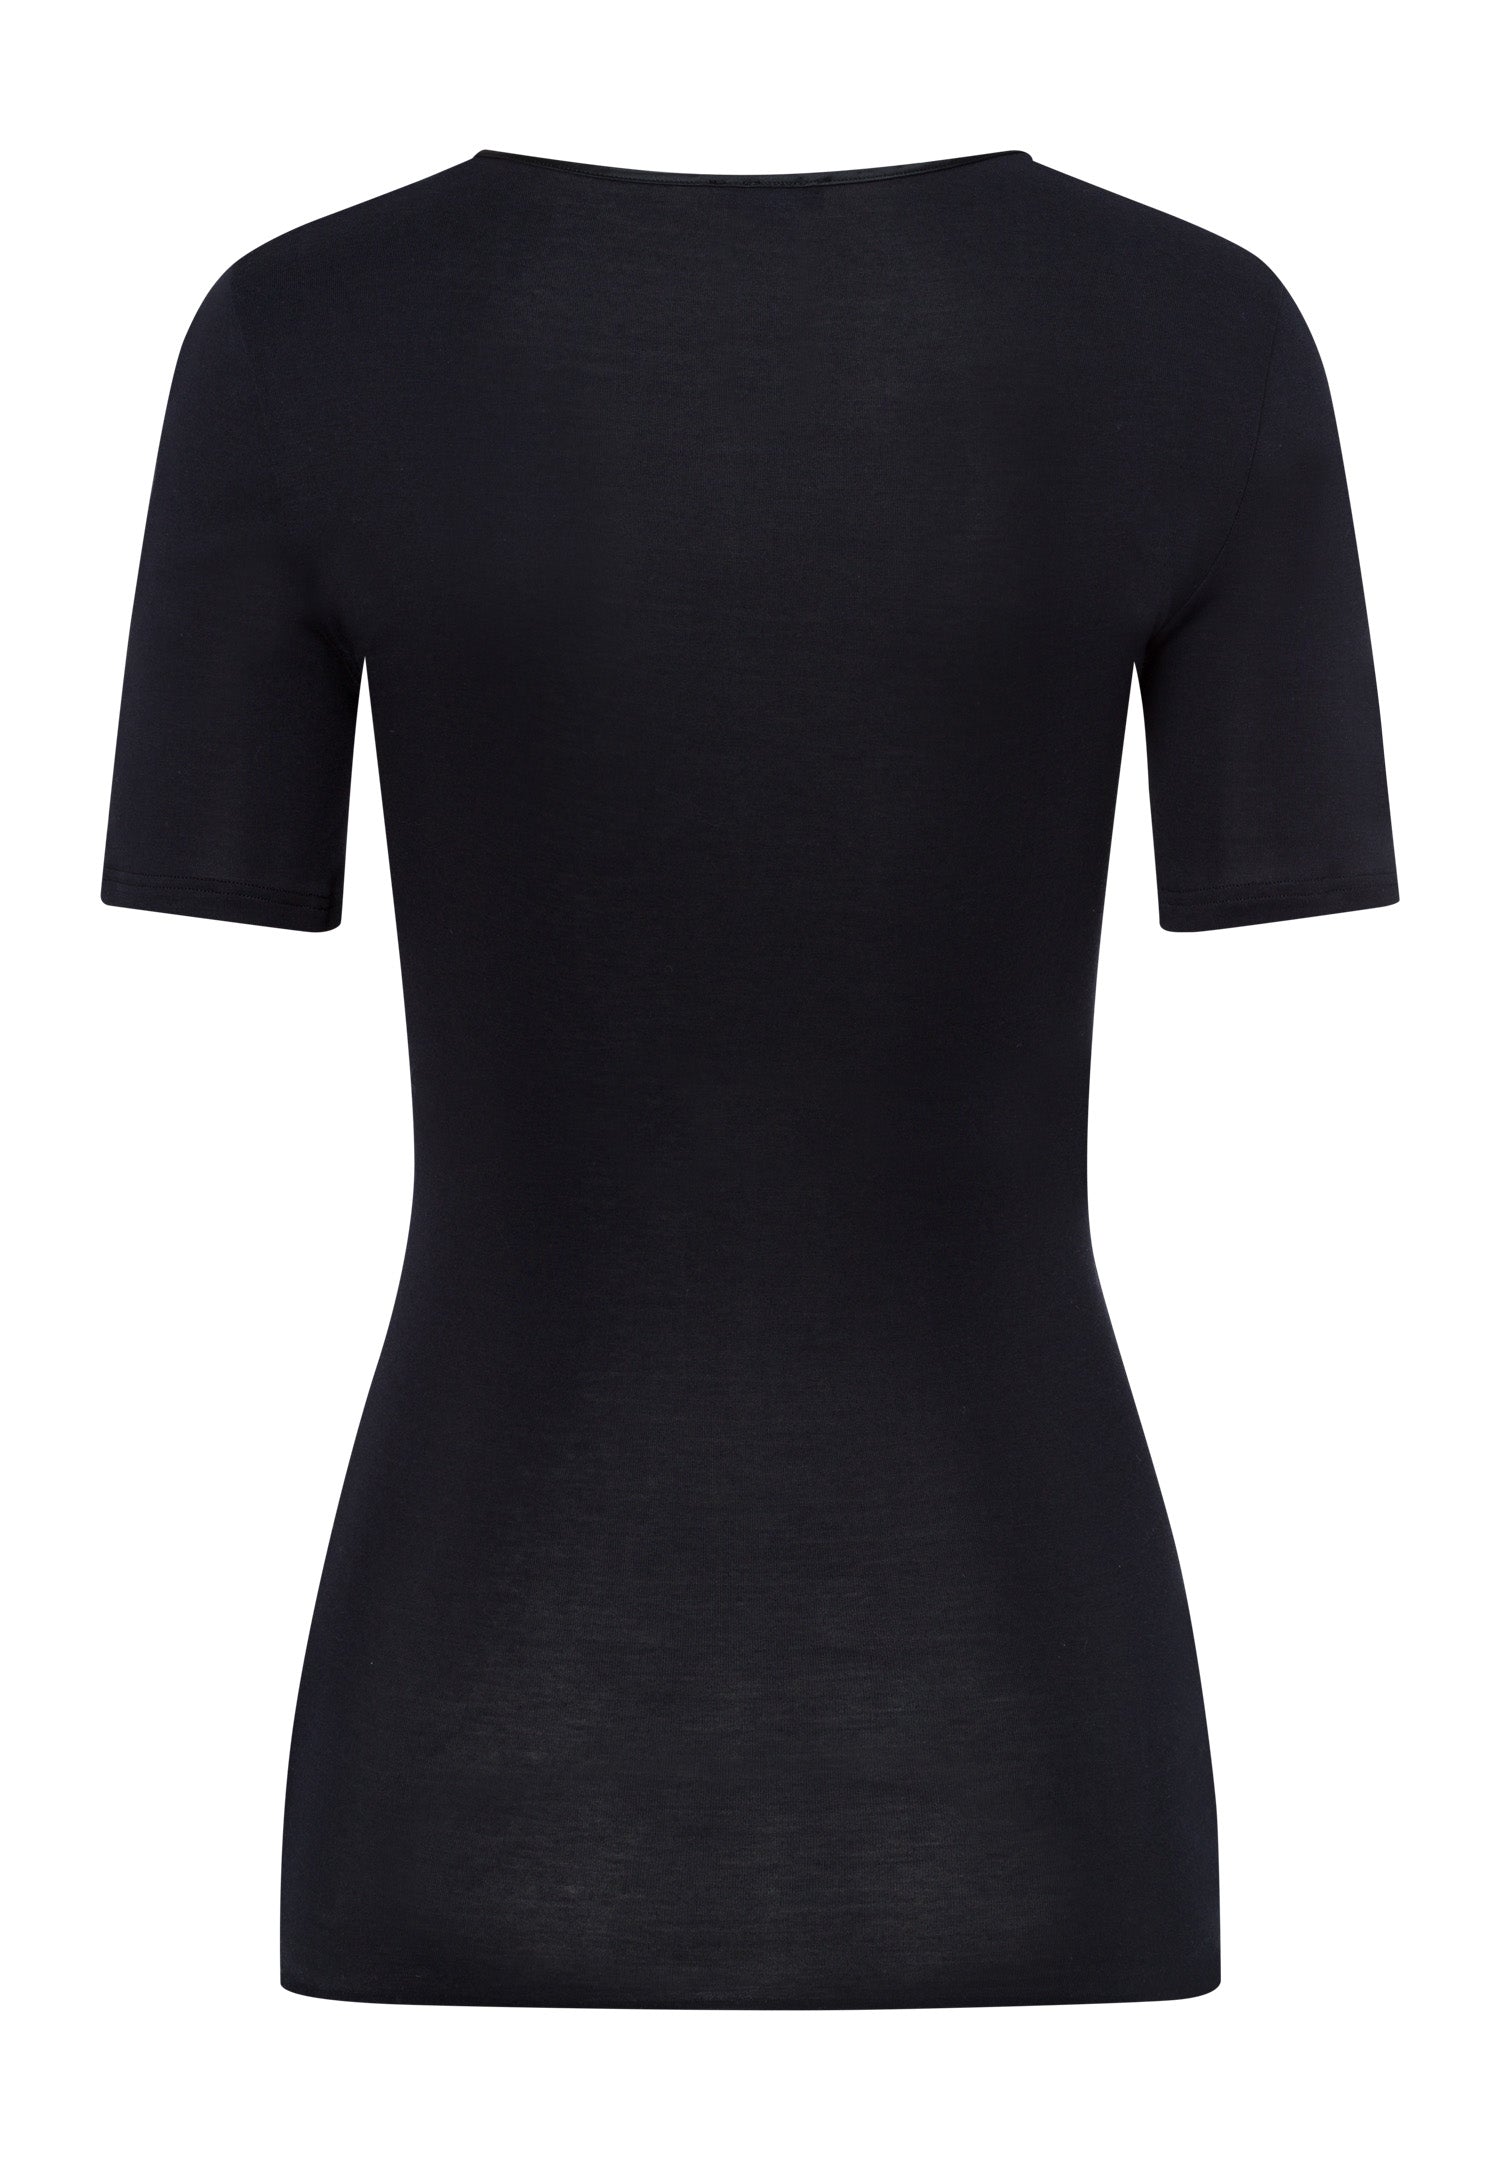 HANRO Black Cotton Seamless Short Sleeve Shirt